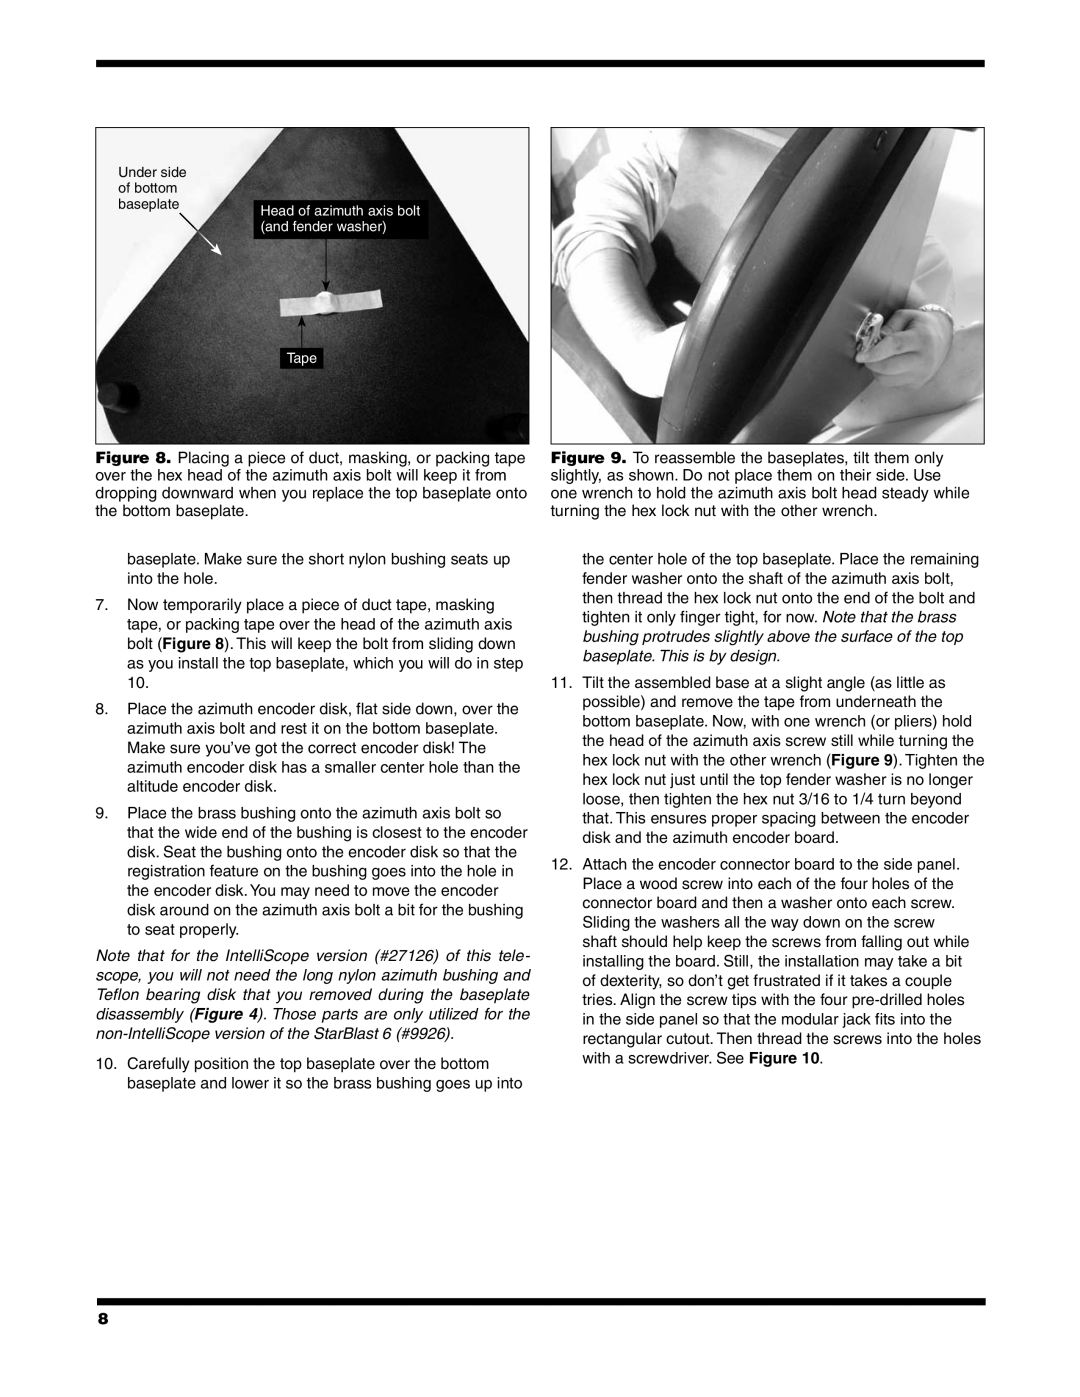 Orion 6/6I instruction manual Under side of bottom, Tape 